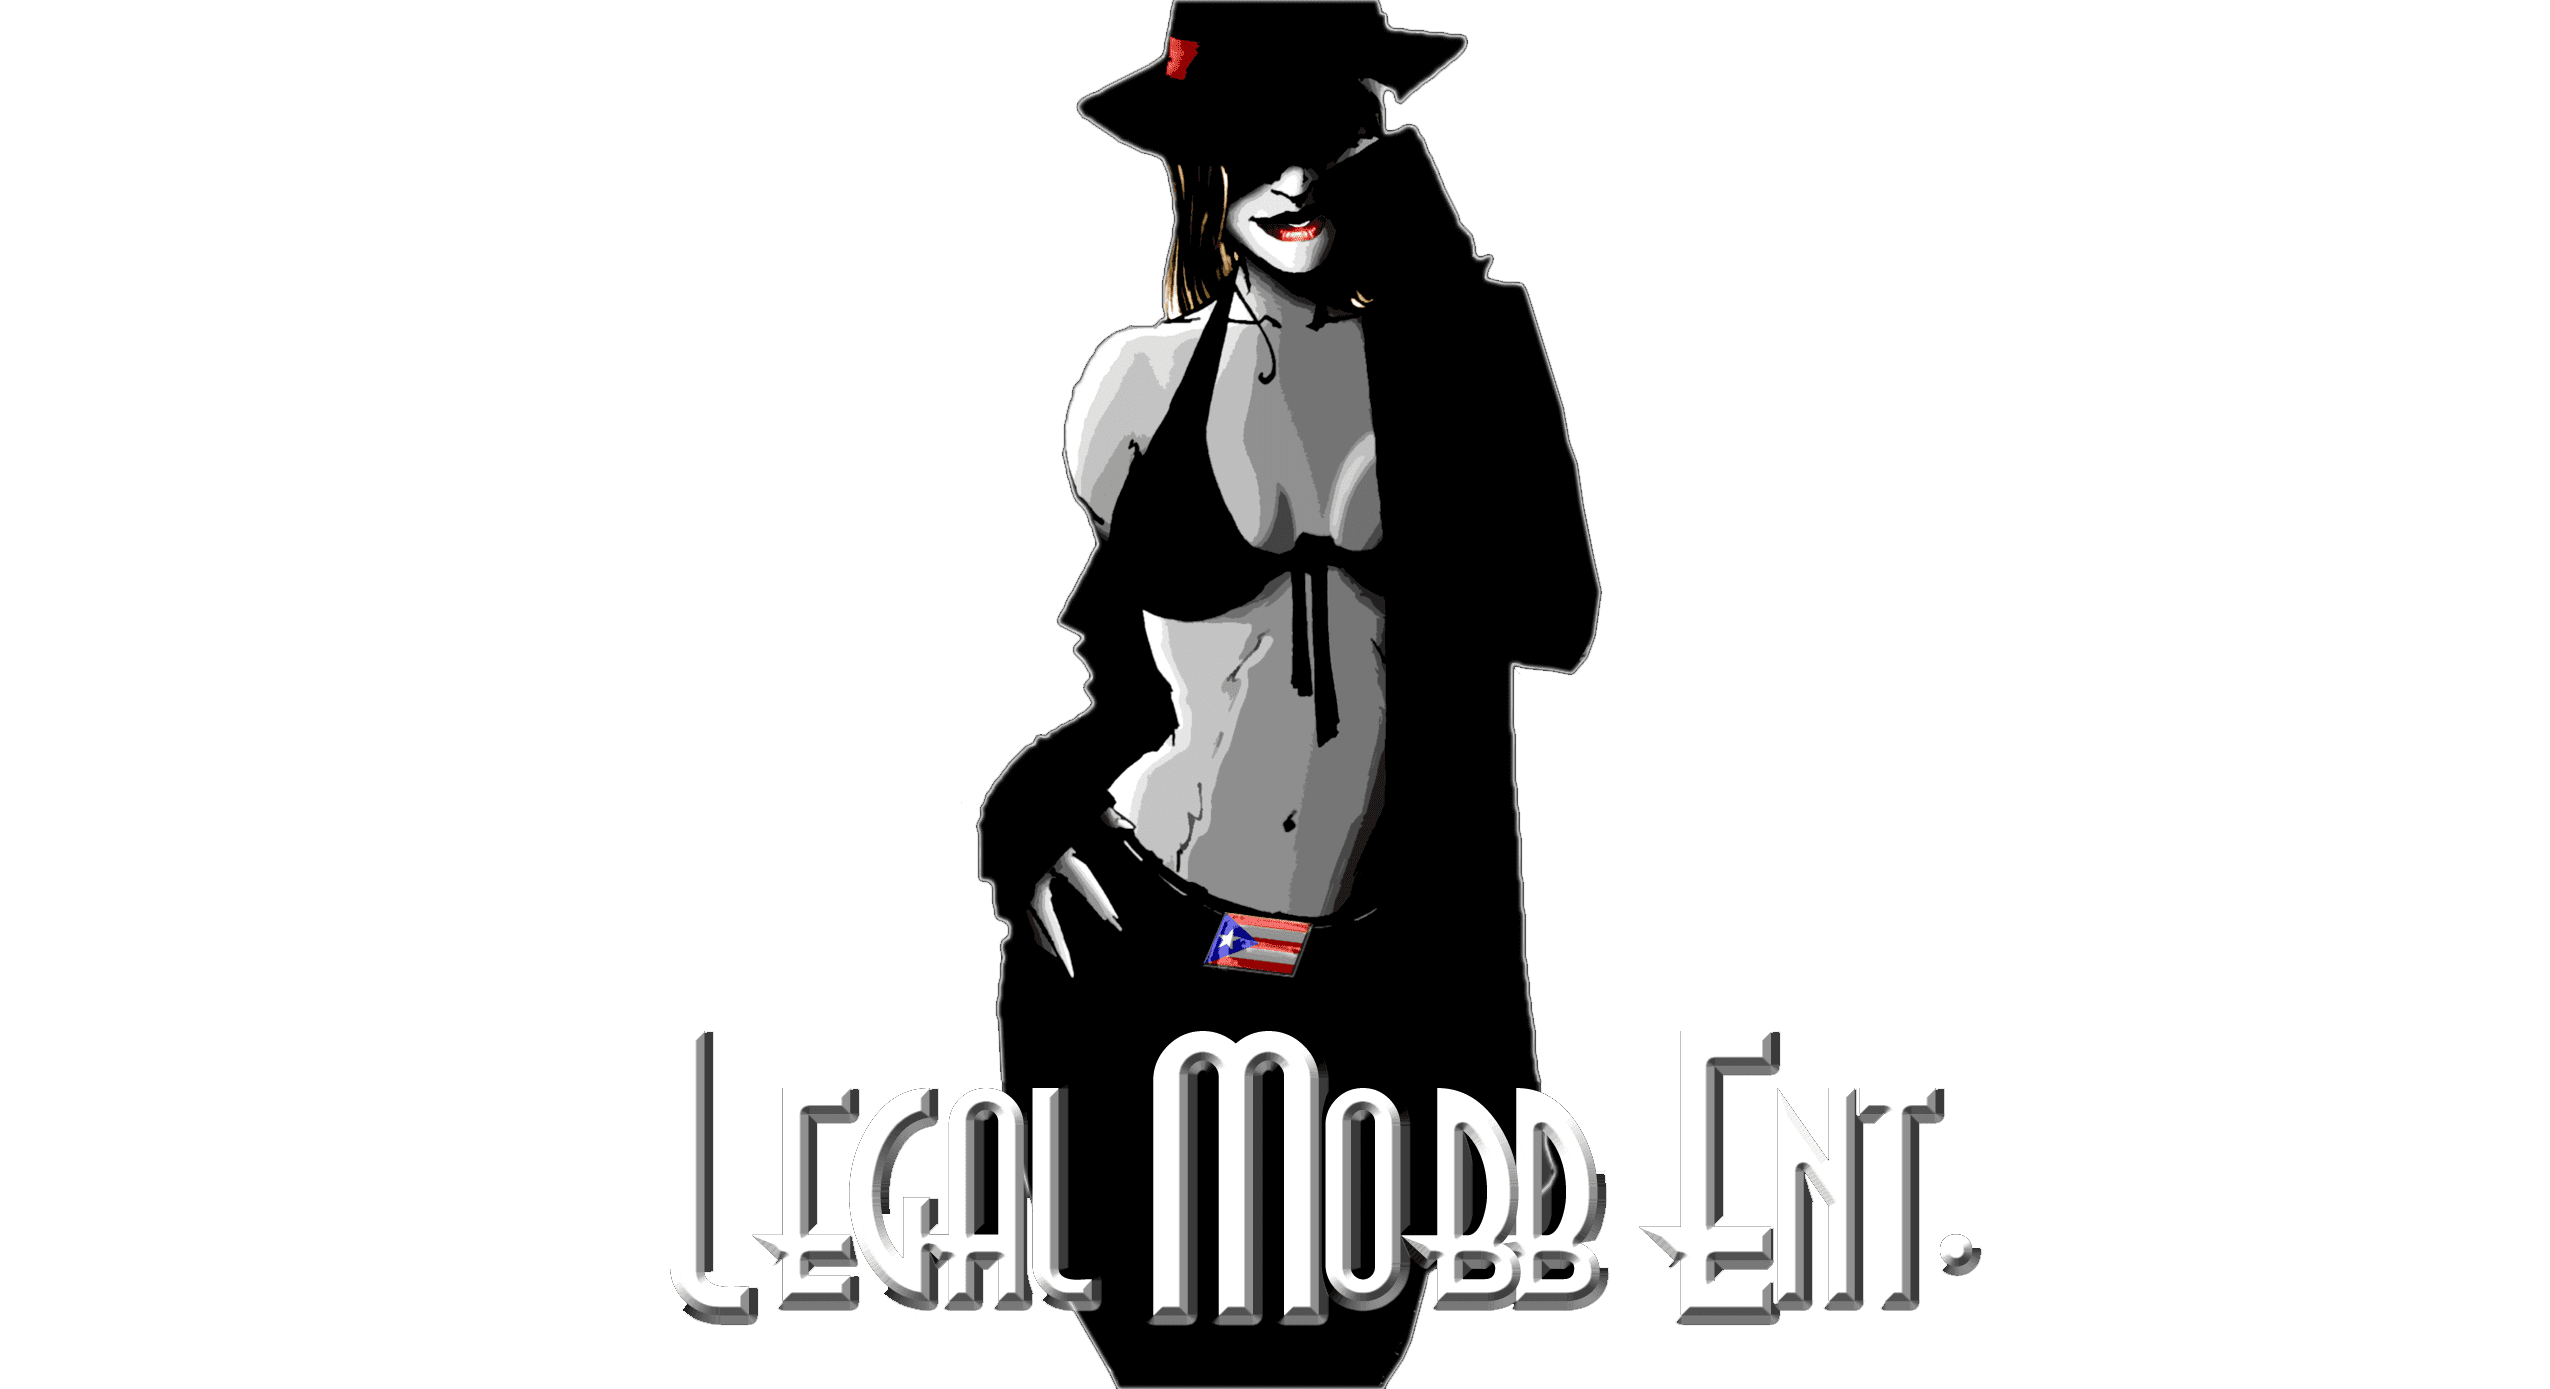 Legal Mobb Entertainment